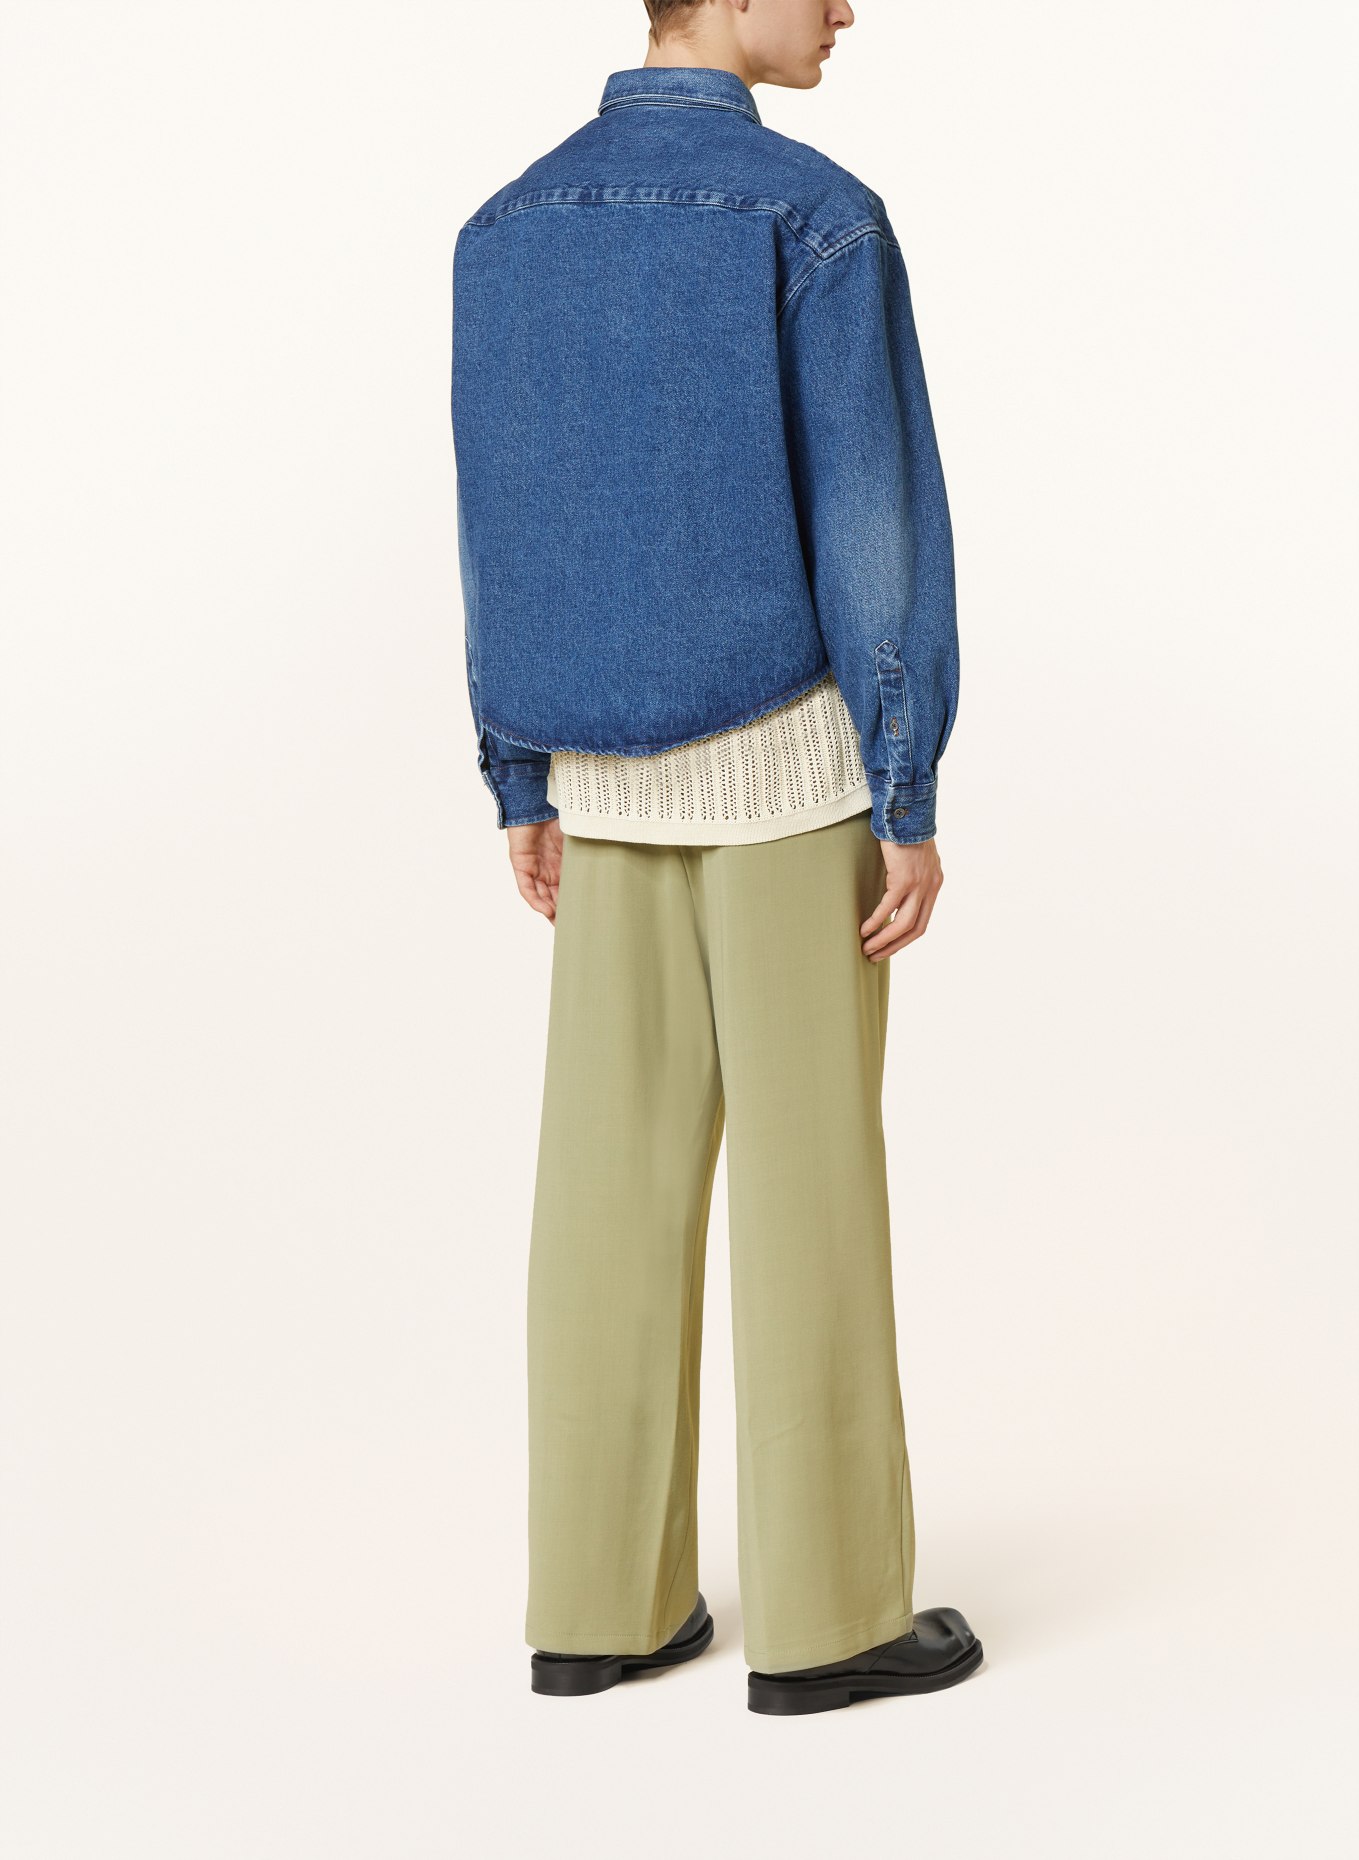 AMI PARIS Jeans-Overjacket, Farbe: BLAU (Bild 3)